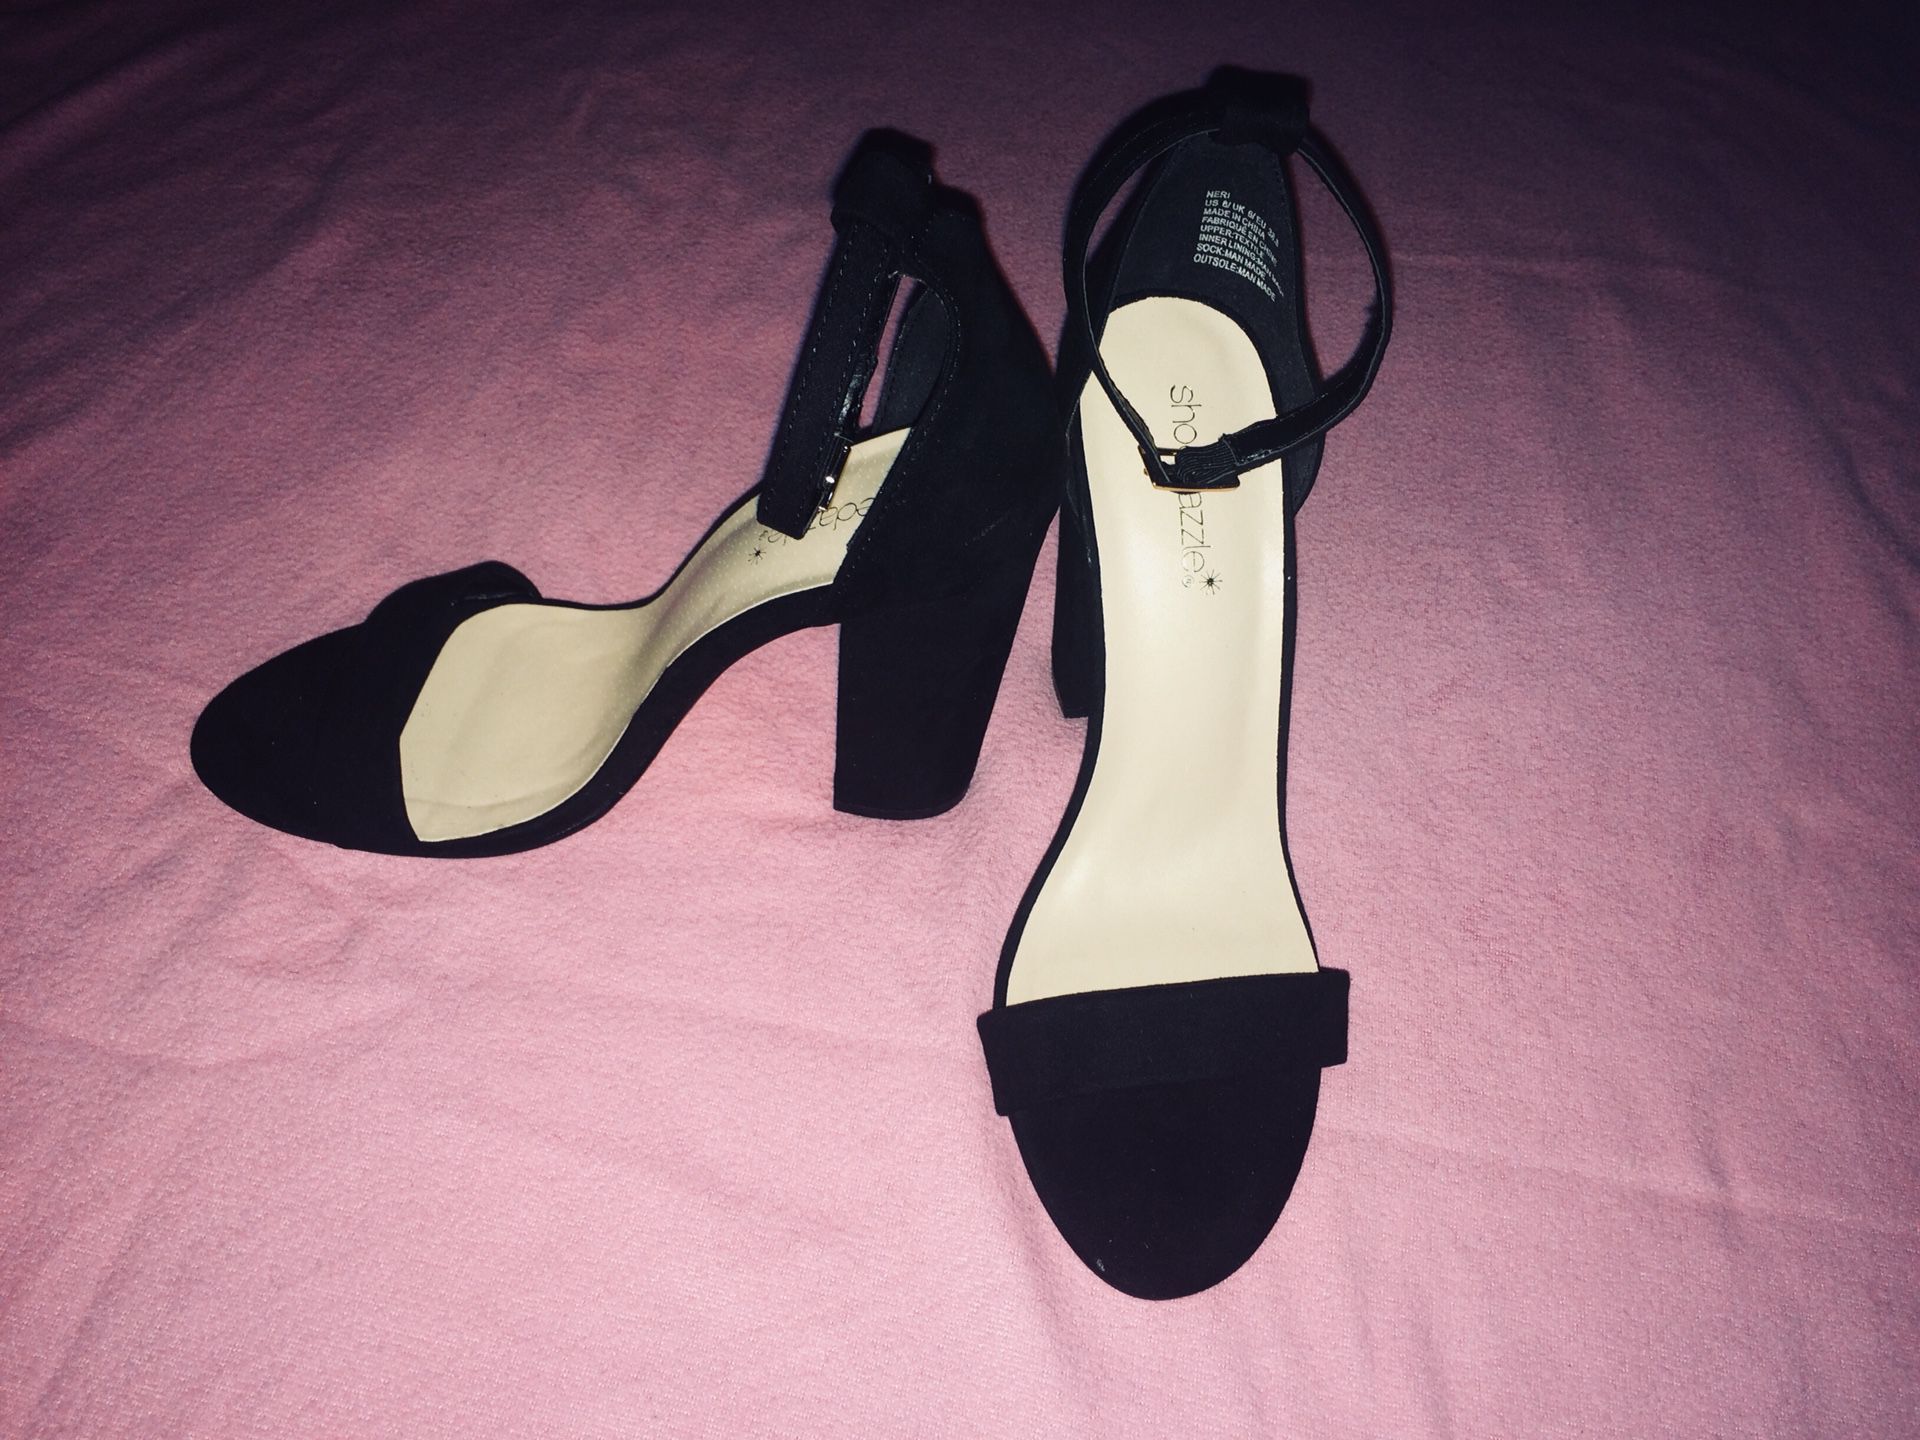 Size 8 women’s heels